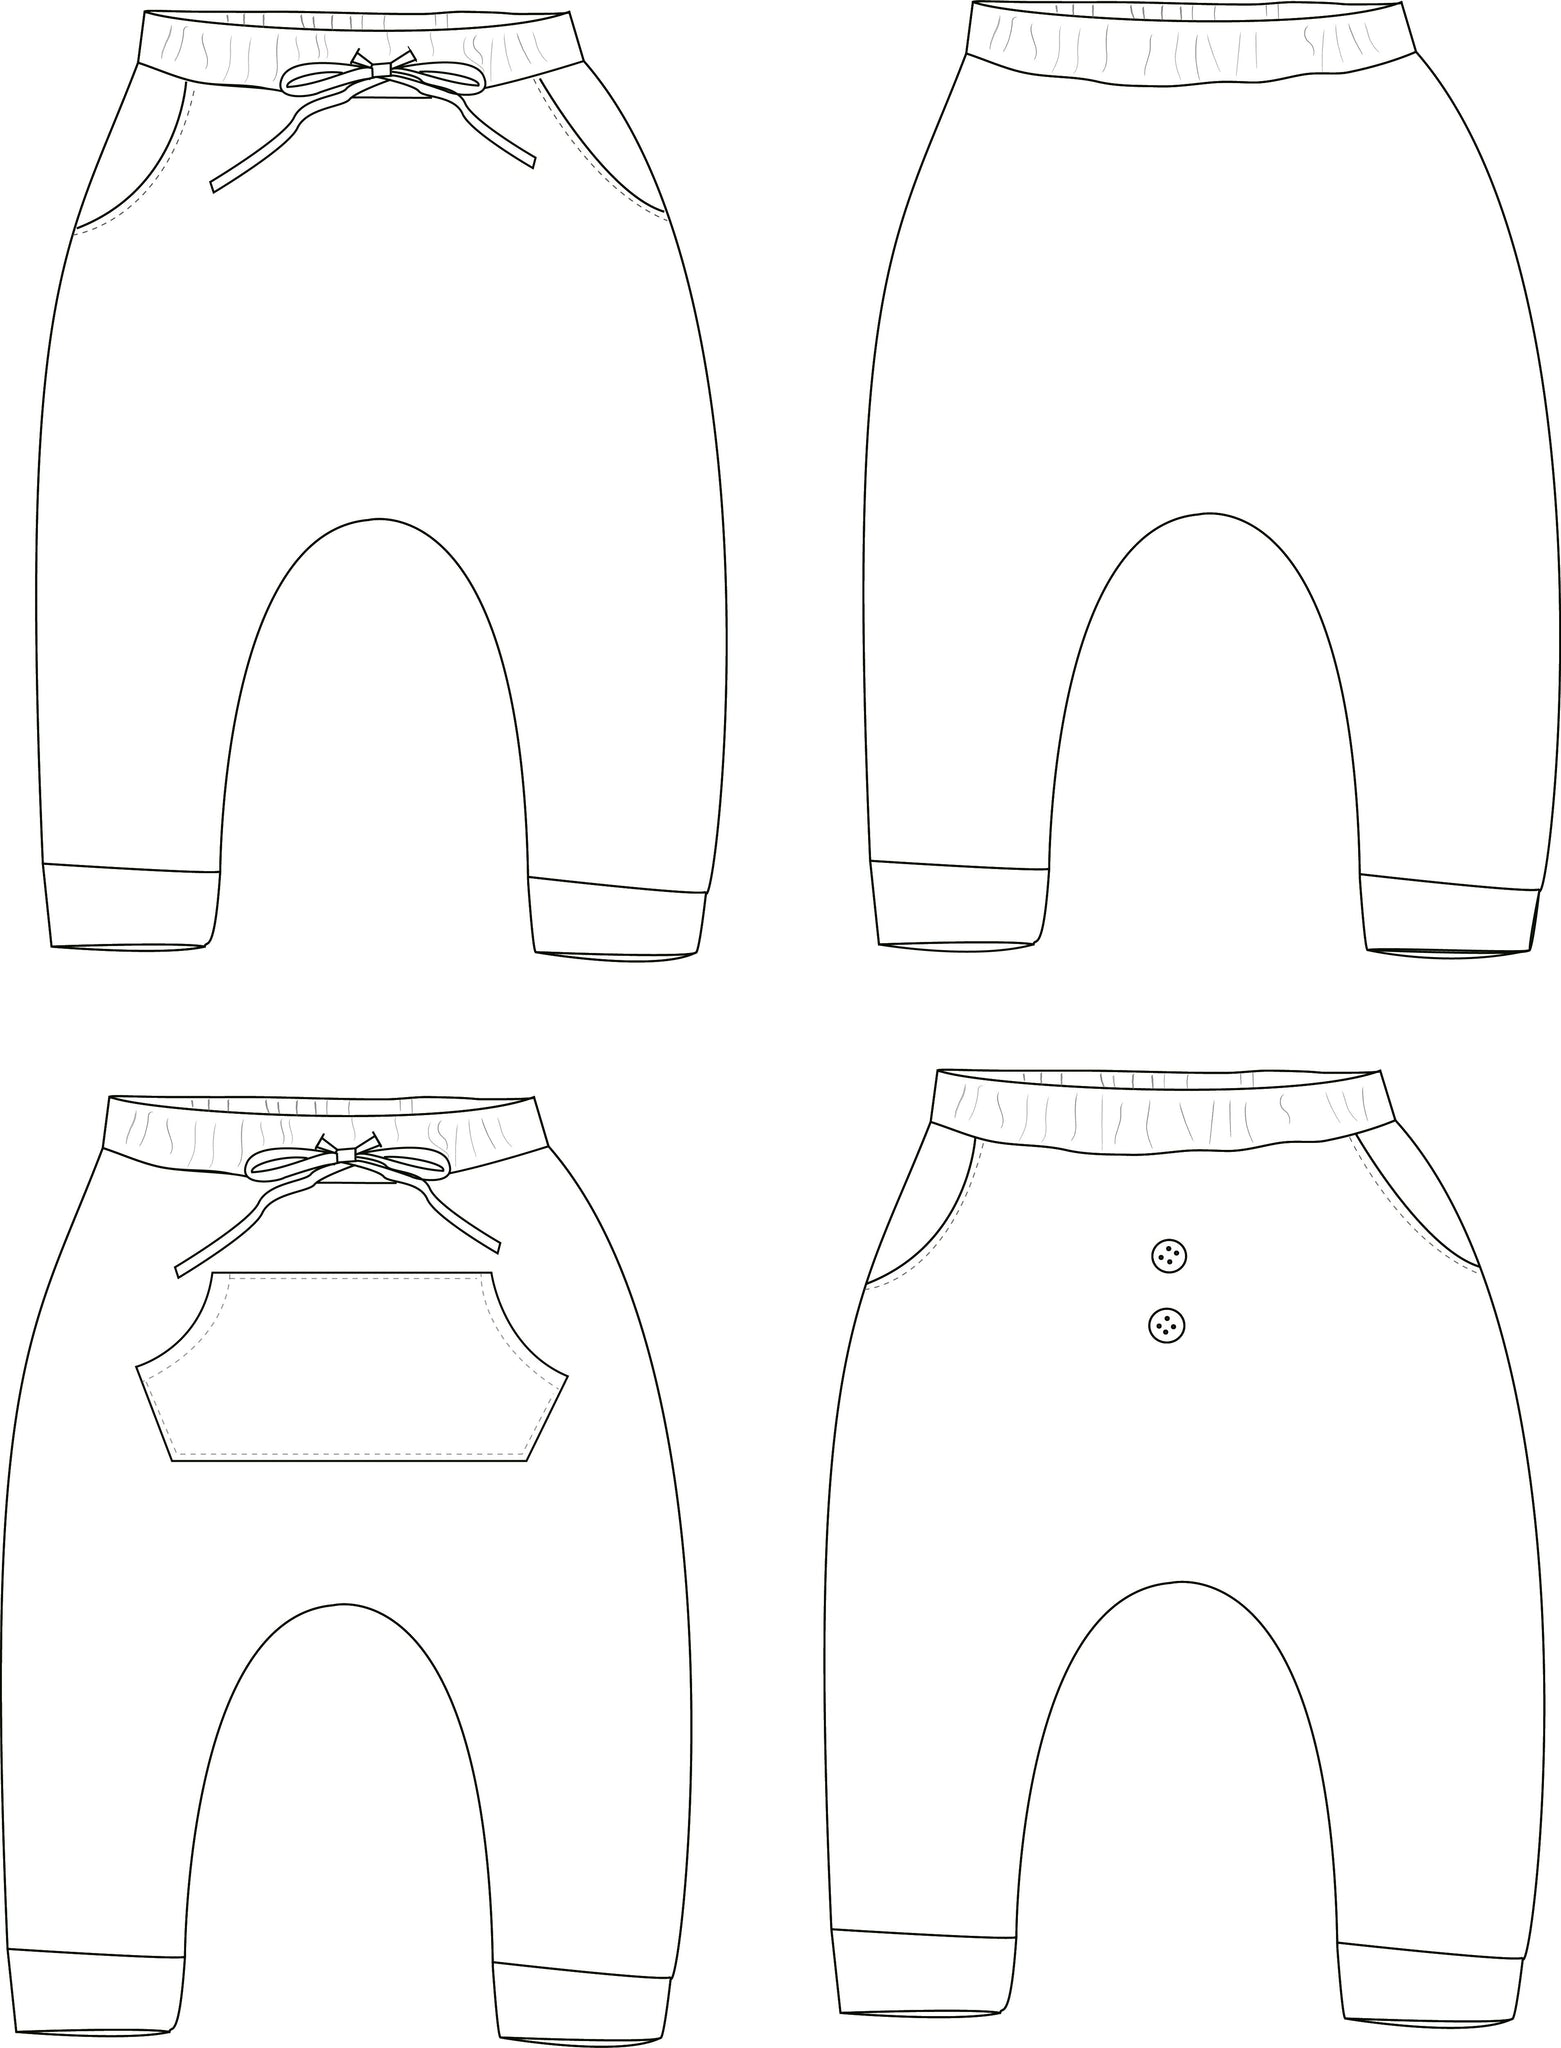 Ravelry: Newborn Crochet Shorts/Pants pattern by Shae Simms